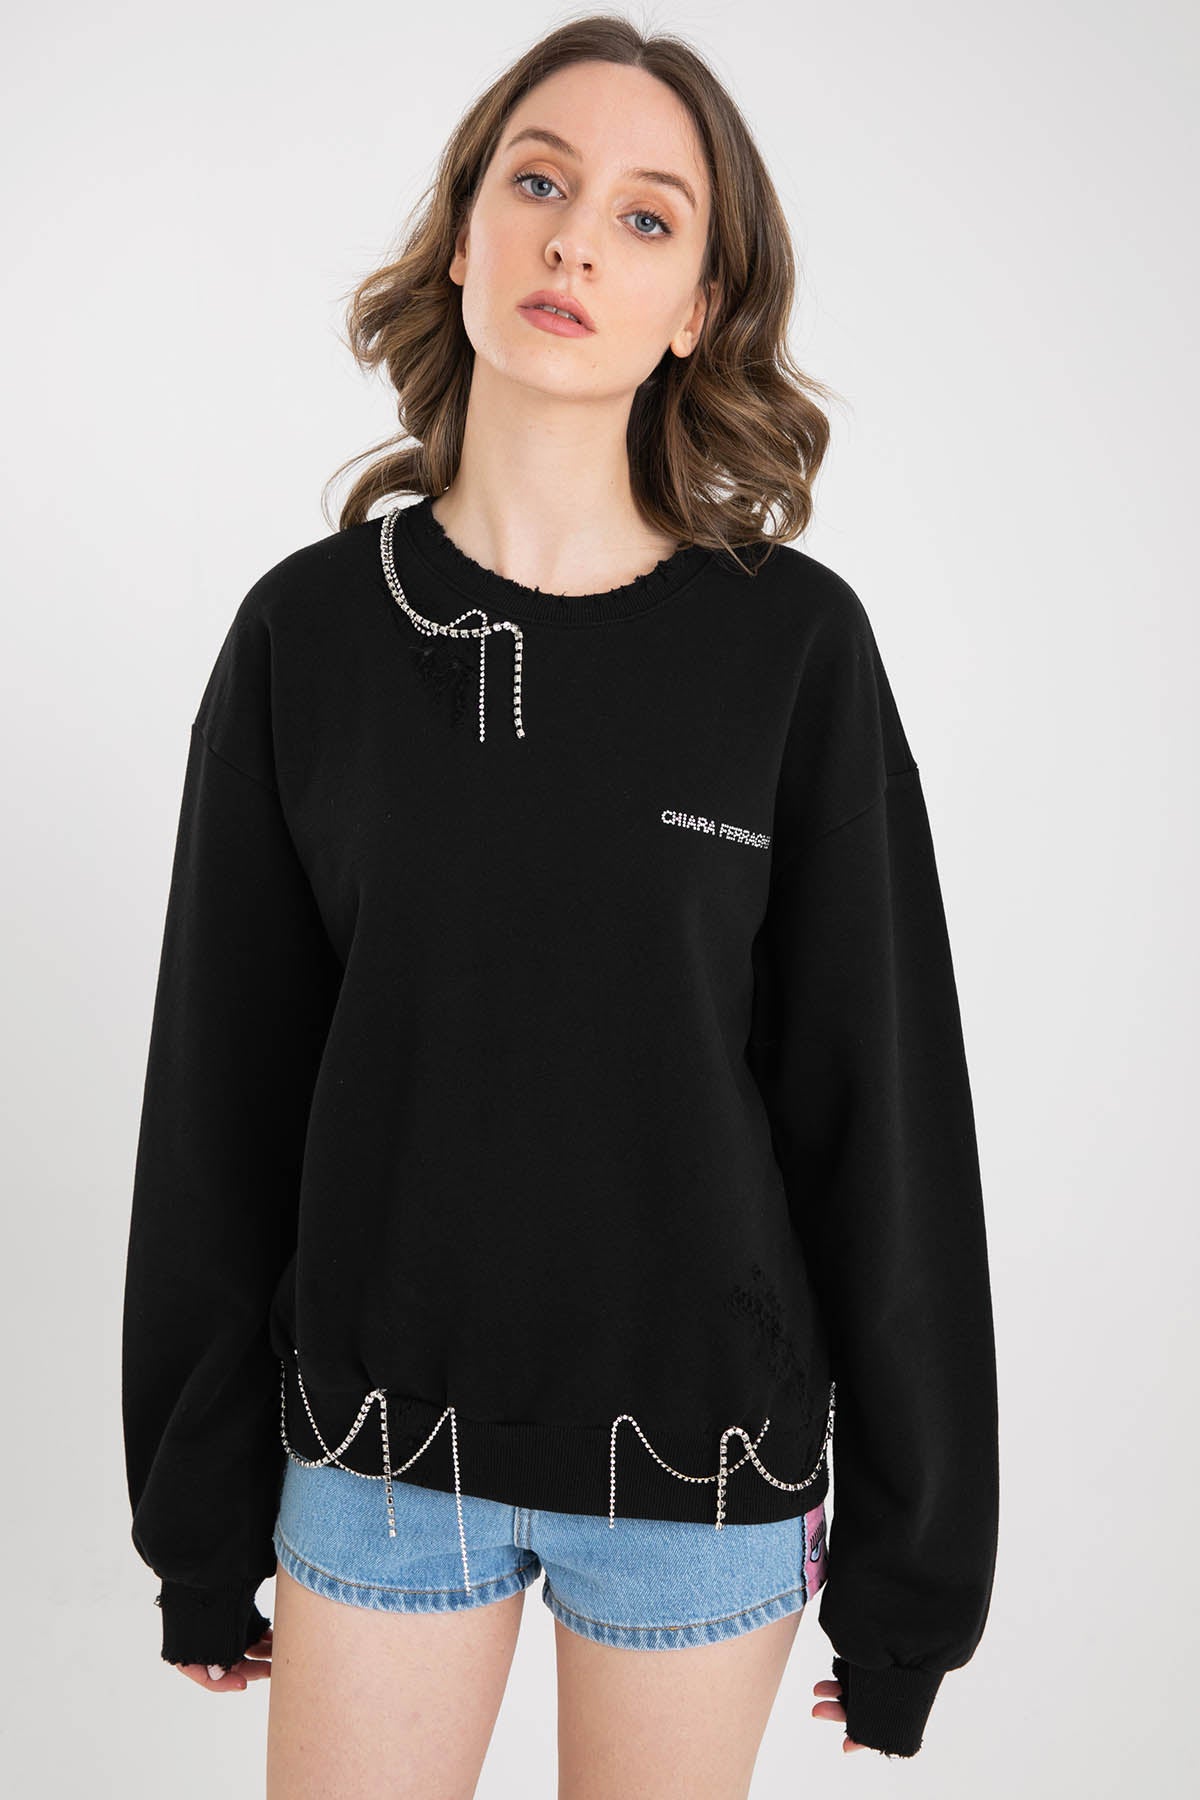 Chiara Ferragni Taş Aksesuarlı Sweatshirt-Libas Trendy Fashion Store